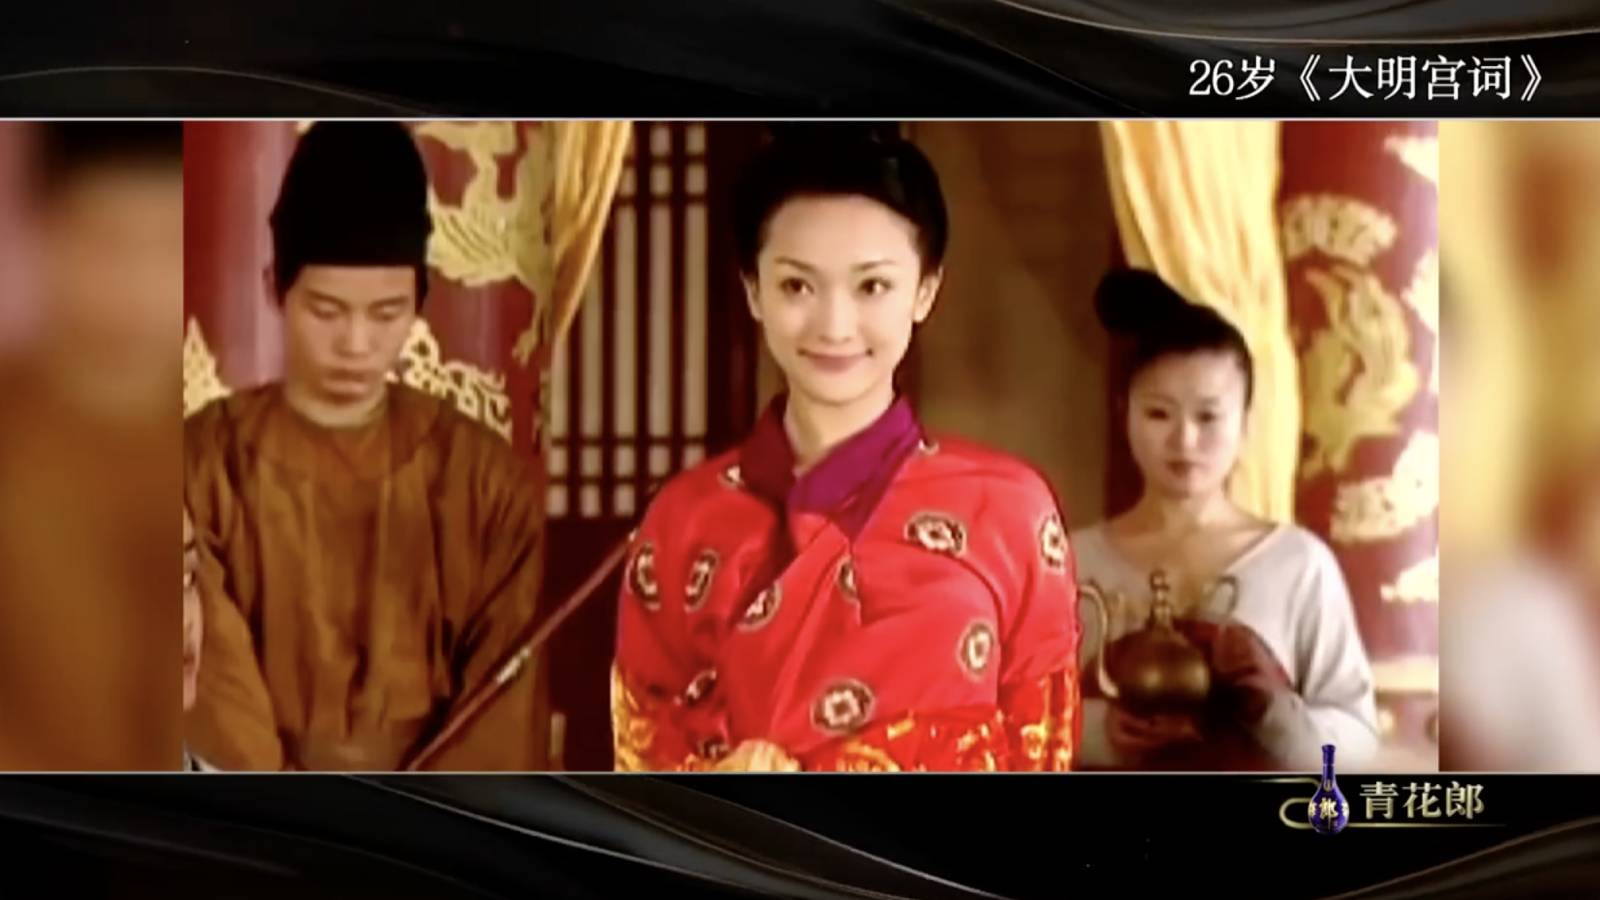 Zhou Xun was 26 when she played Princess Taiping in Palace of Desire